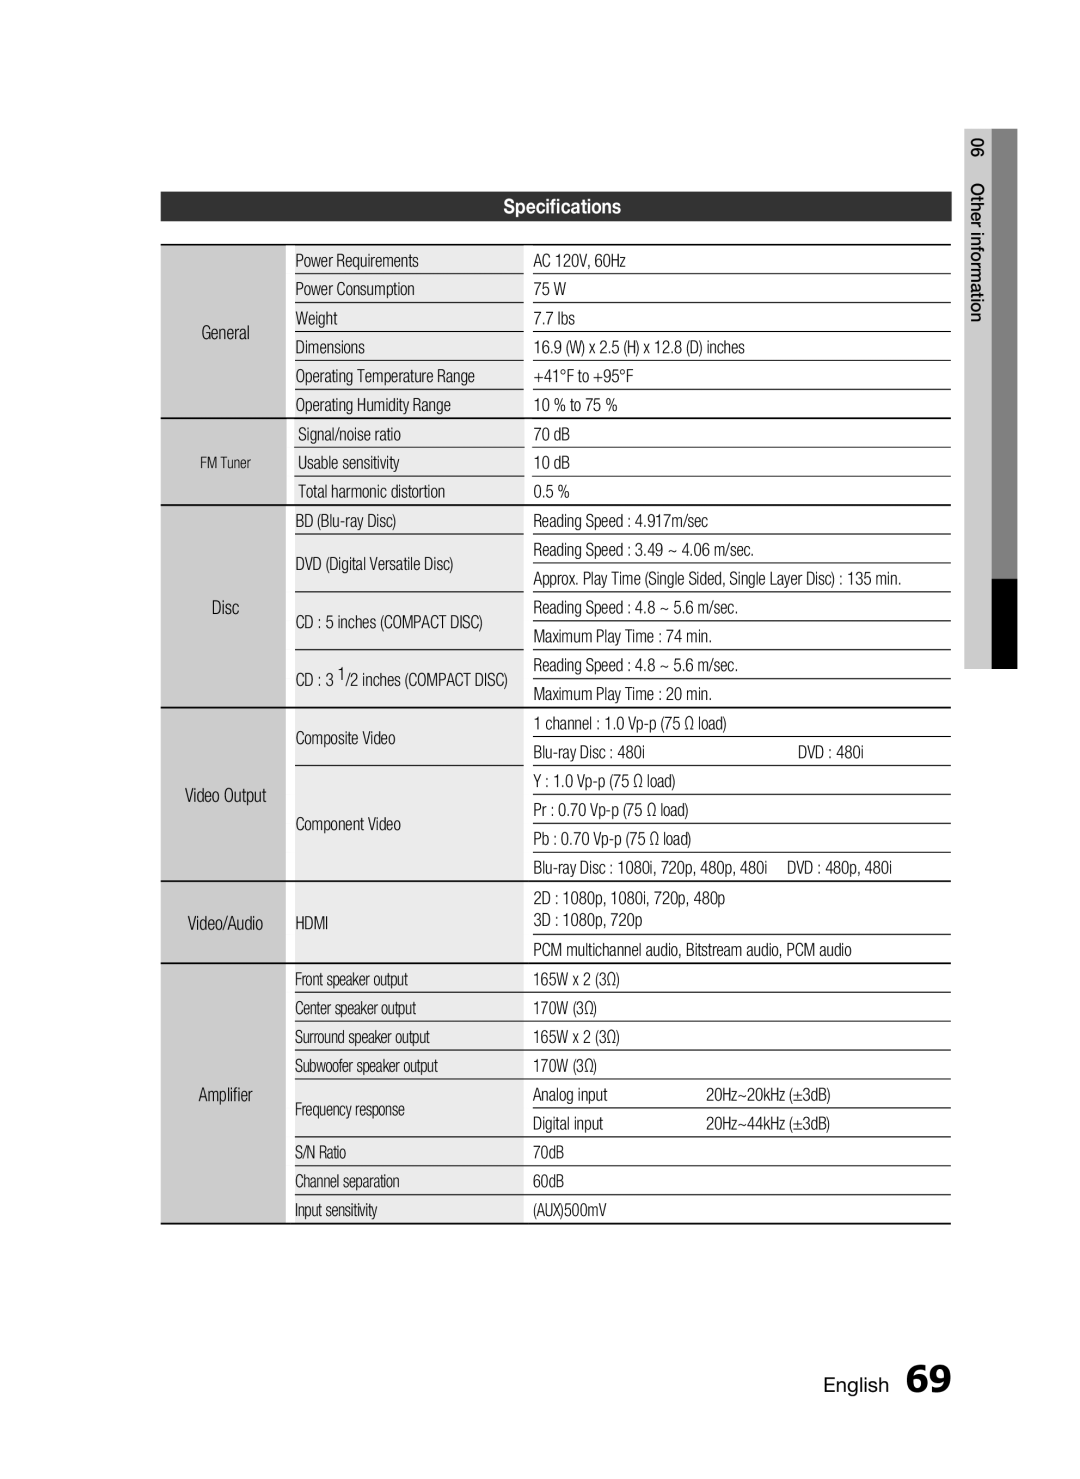 Samsung C6600 user manual Speciﬁcations, English 